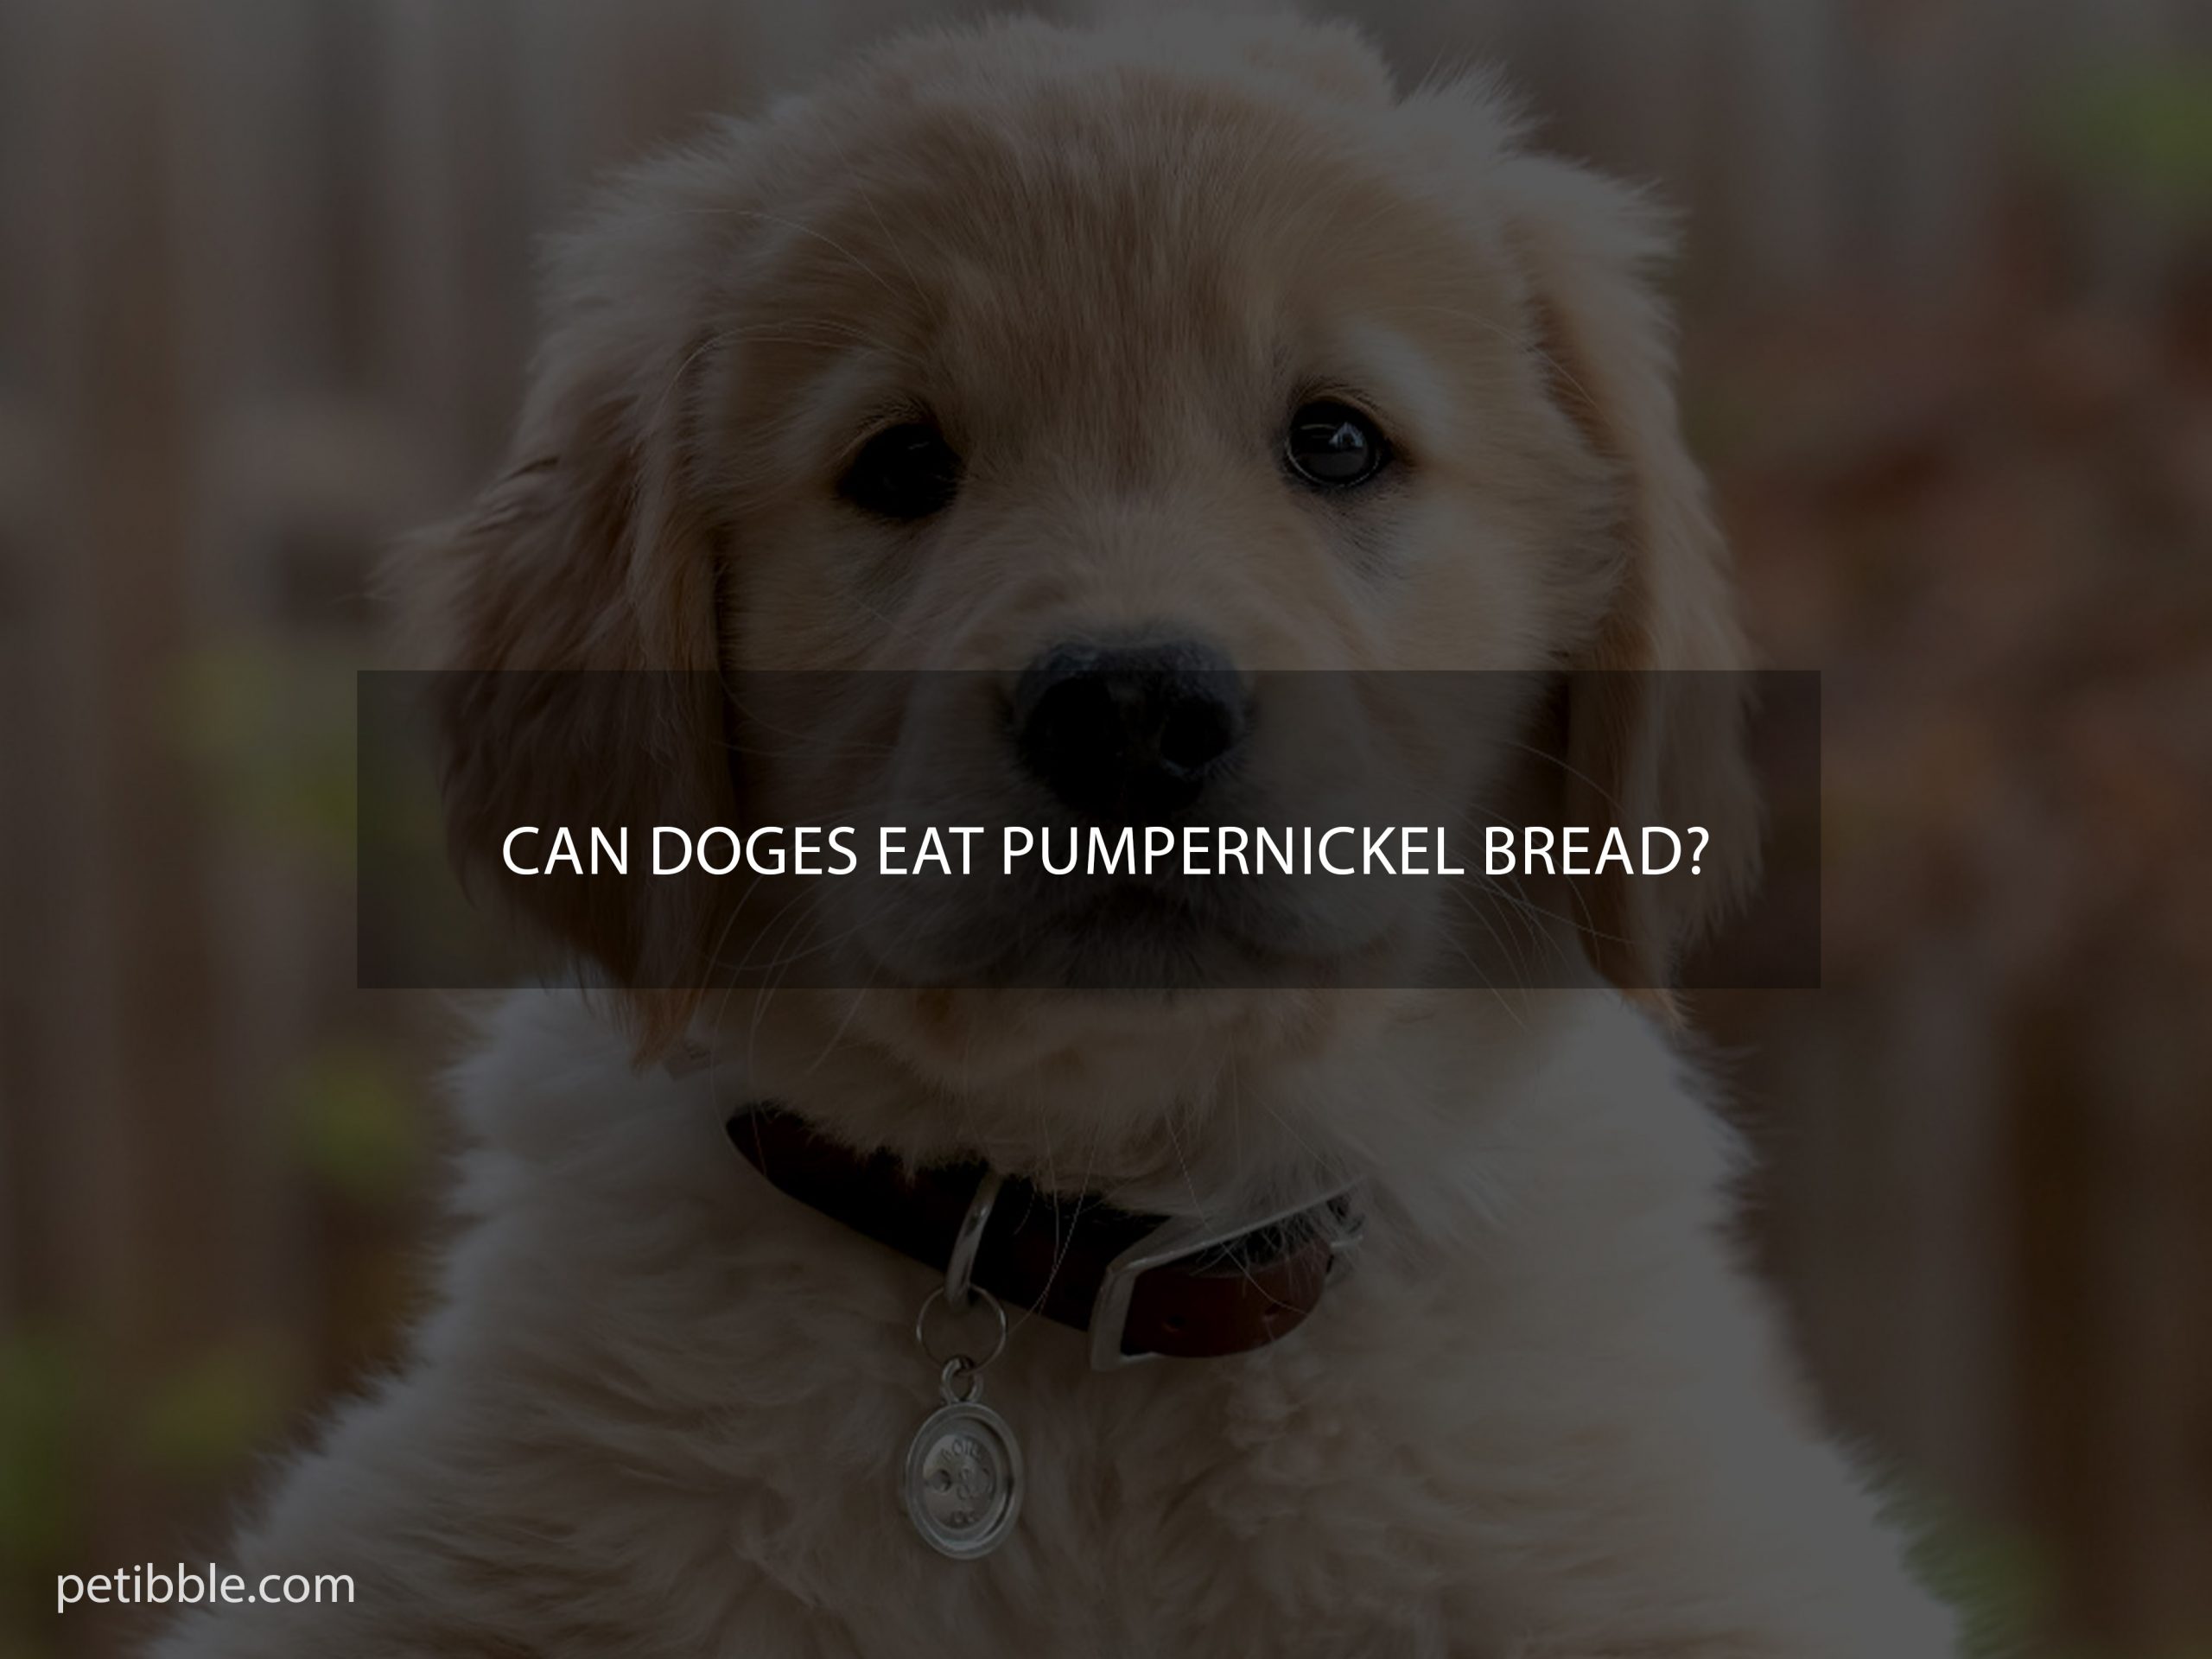 Can doges eat Pumpernickel bread?